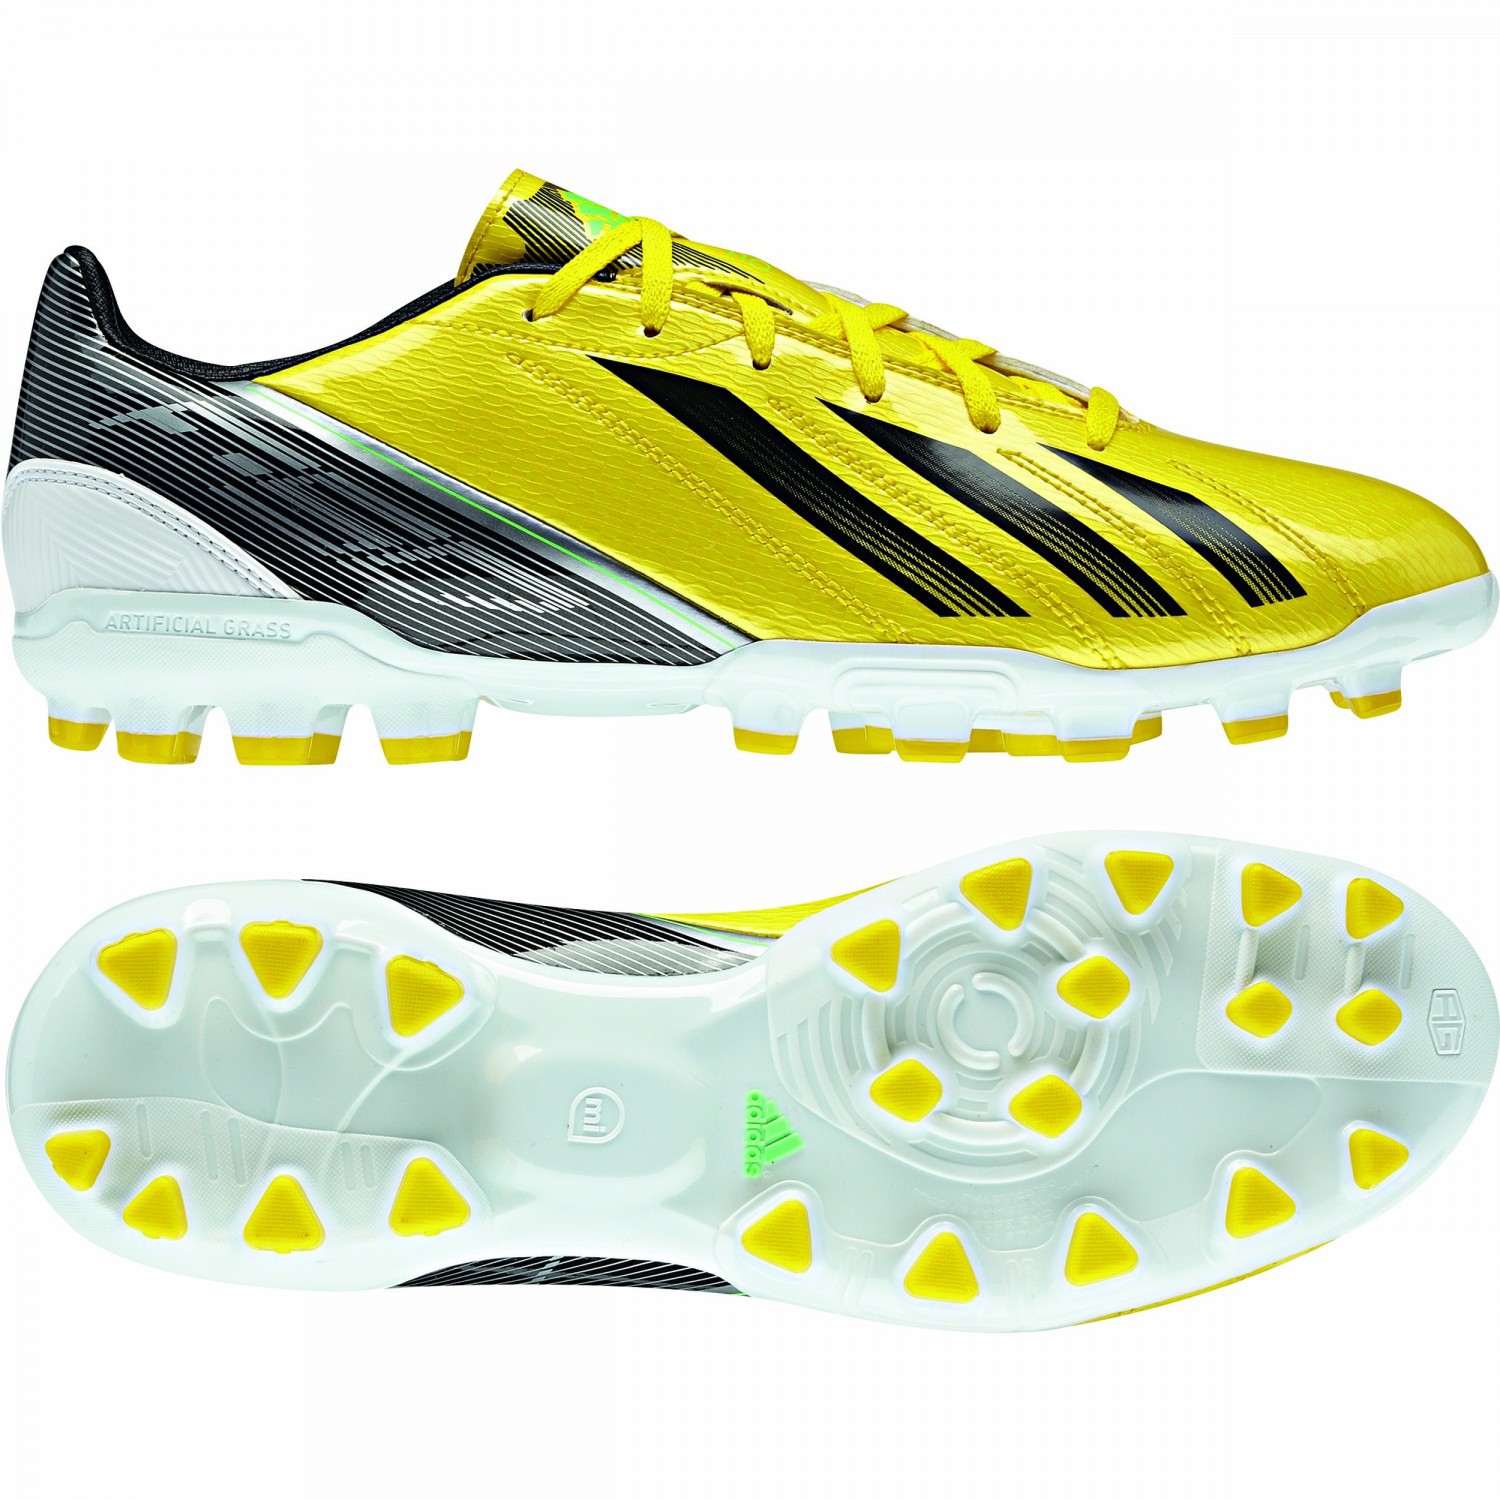 Adidas F10 TRX colore amarillo - Adidas - SportIT.com